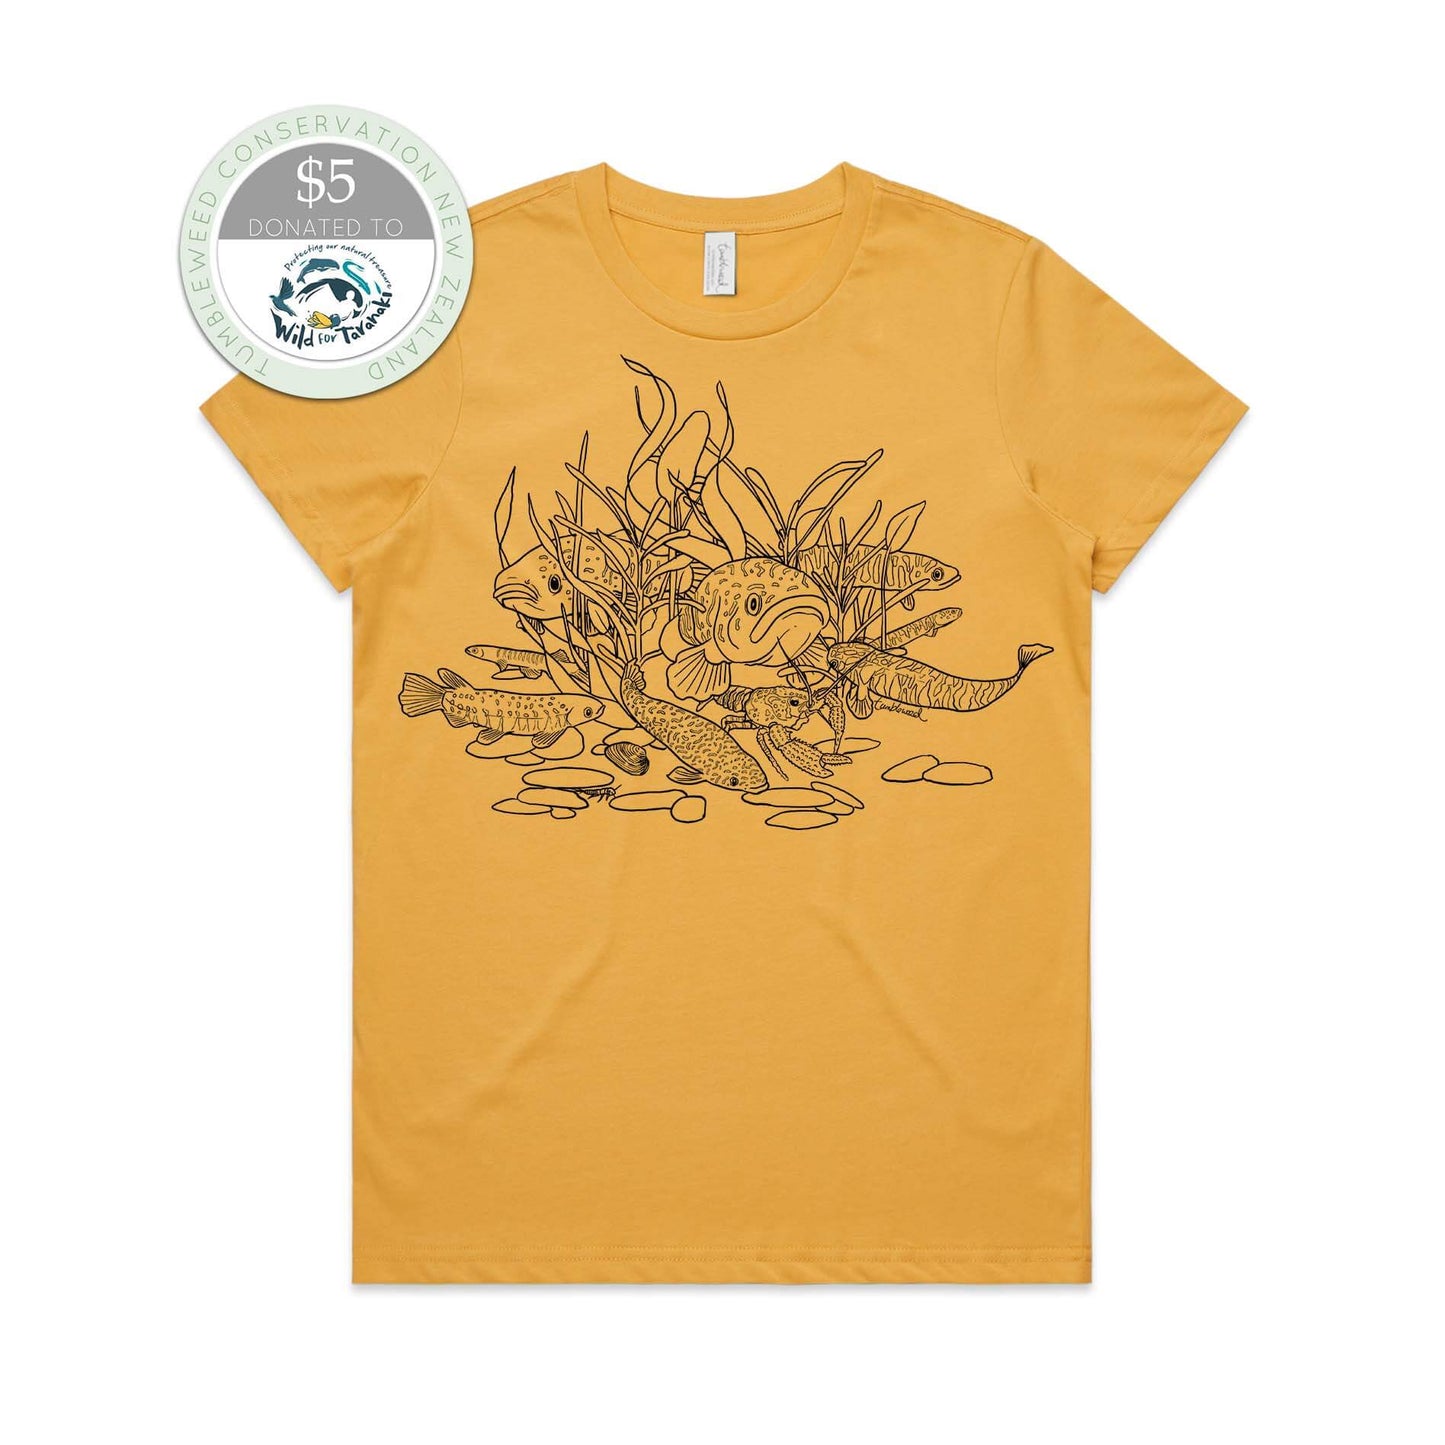 Mustard, female t-shirt featuring a screen printed black Freshwater fish design.